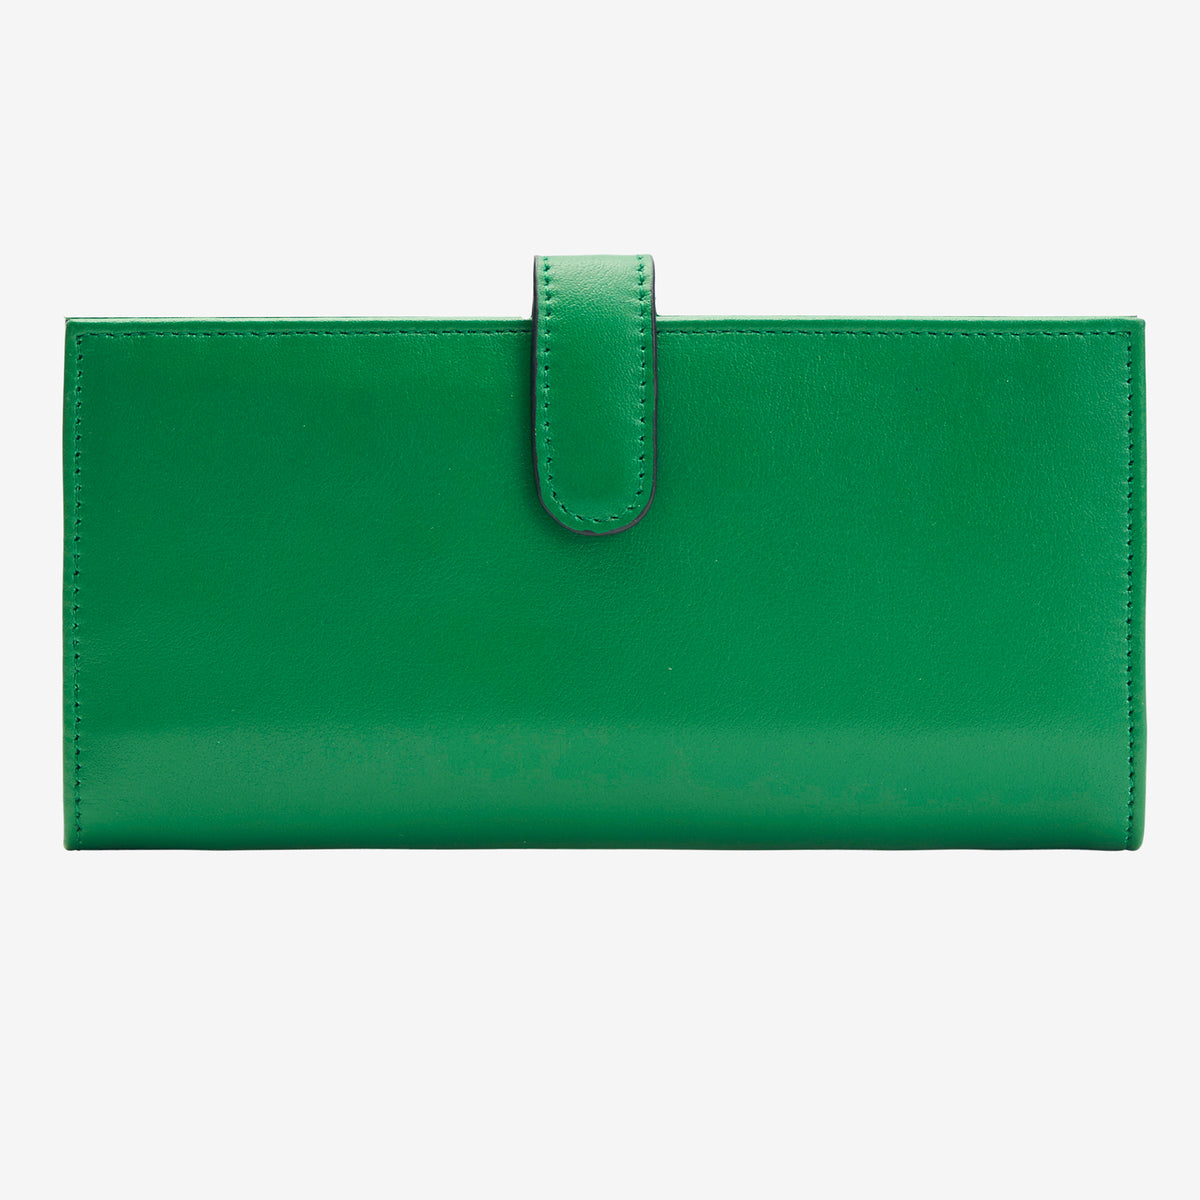     tusk-455-womens-joy-slim-leather-clutch-wallet-emerald-front